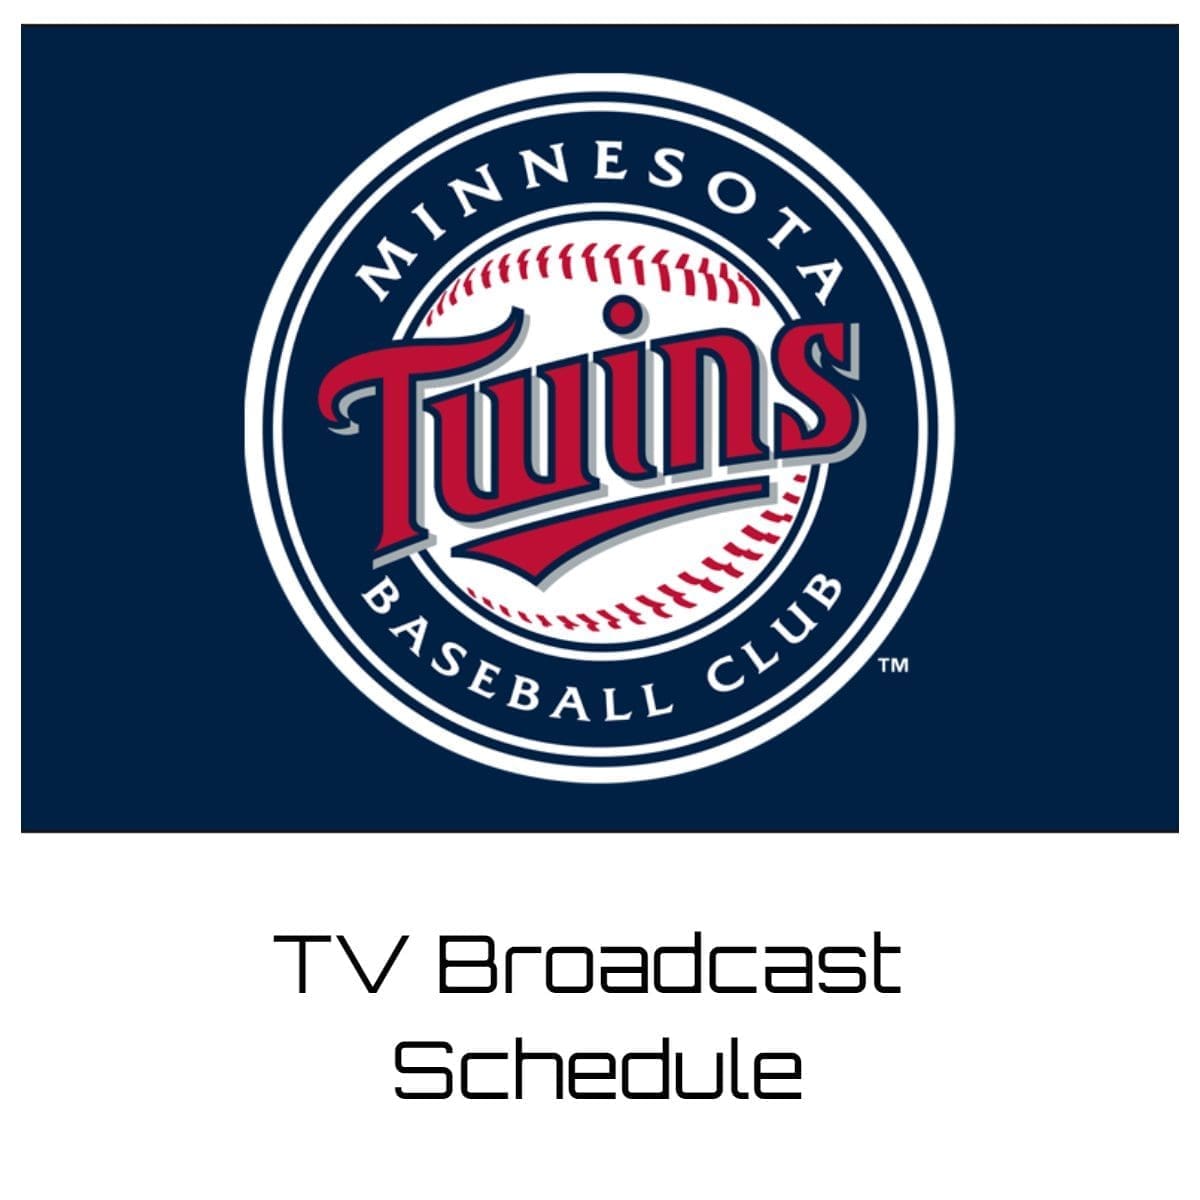 Minnesota Twins TV Broadcast Schedule